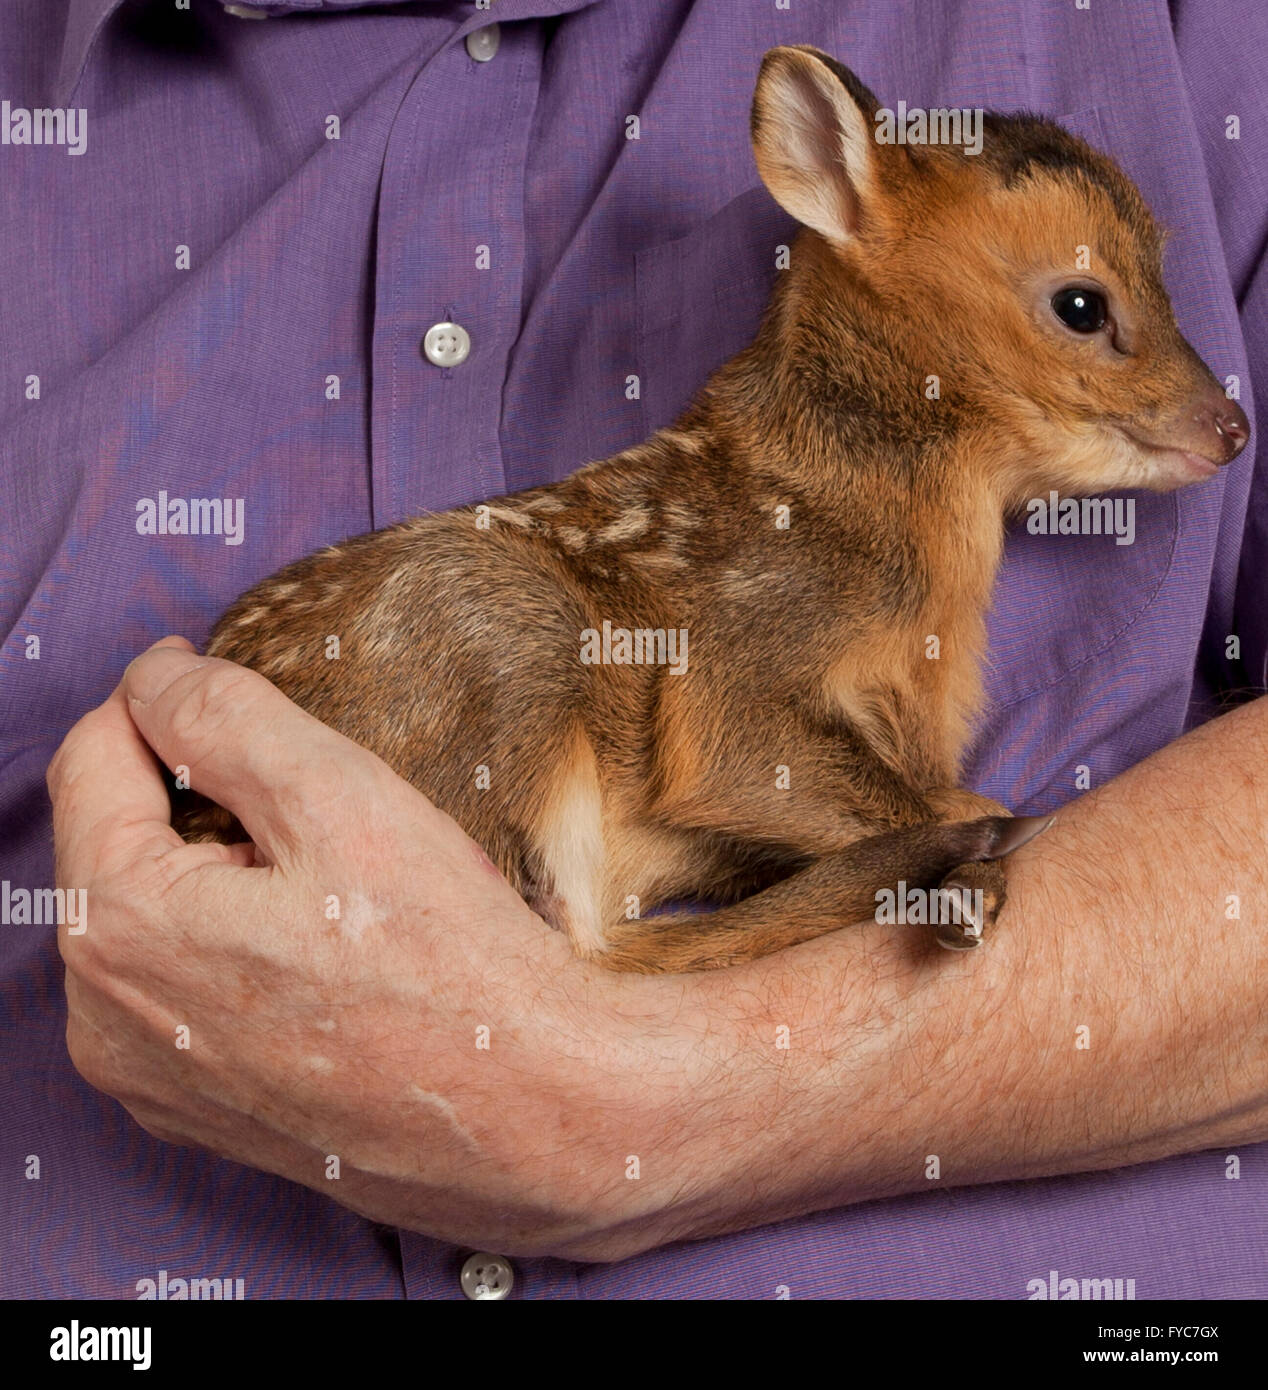 Muntjac deer, Muntiacus reevesi, Juvenile in hand Stock Photo